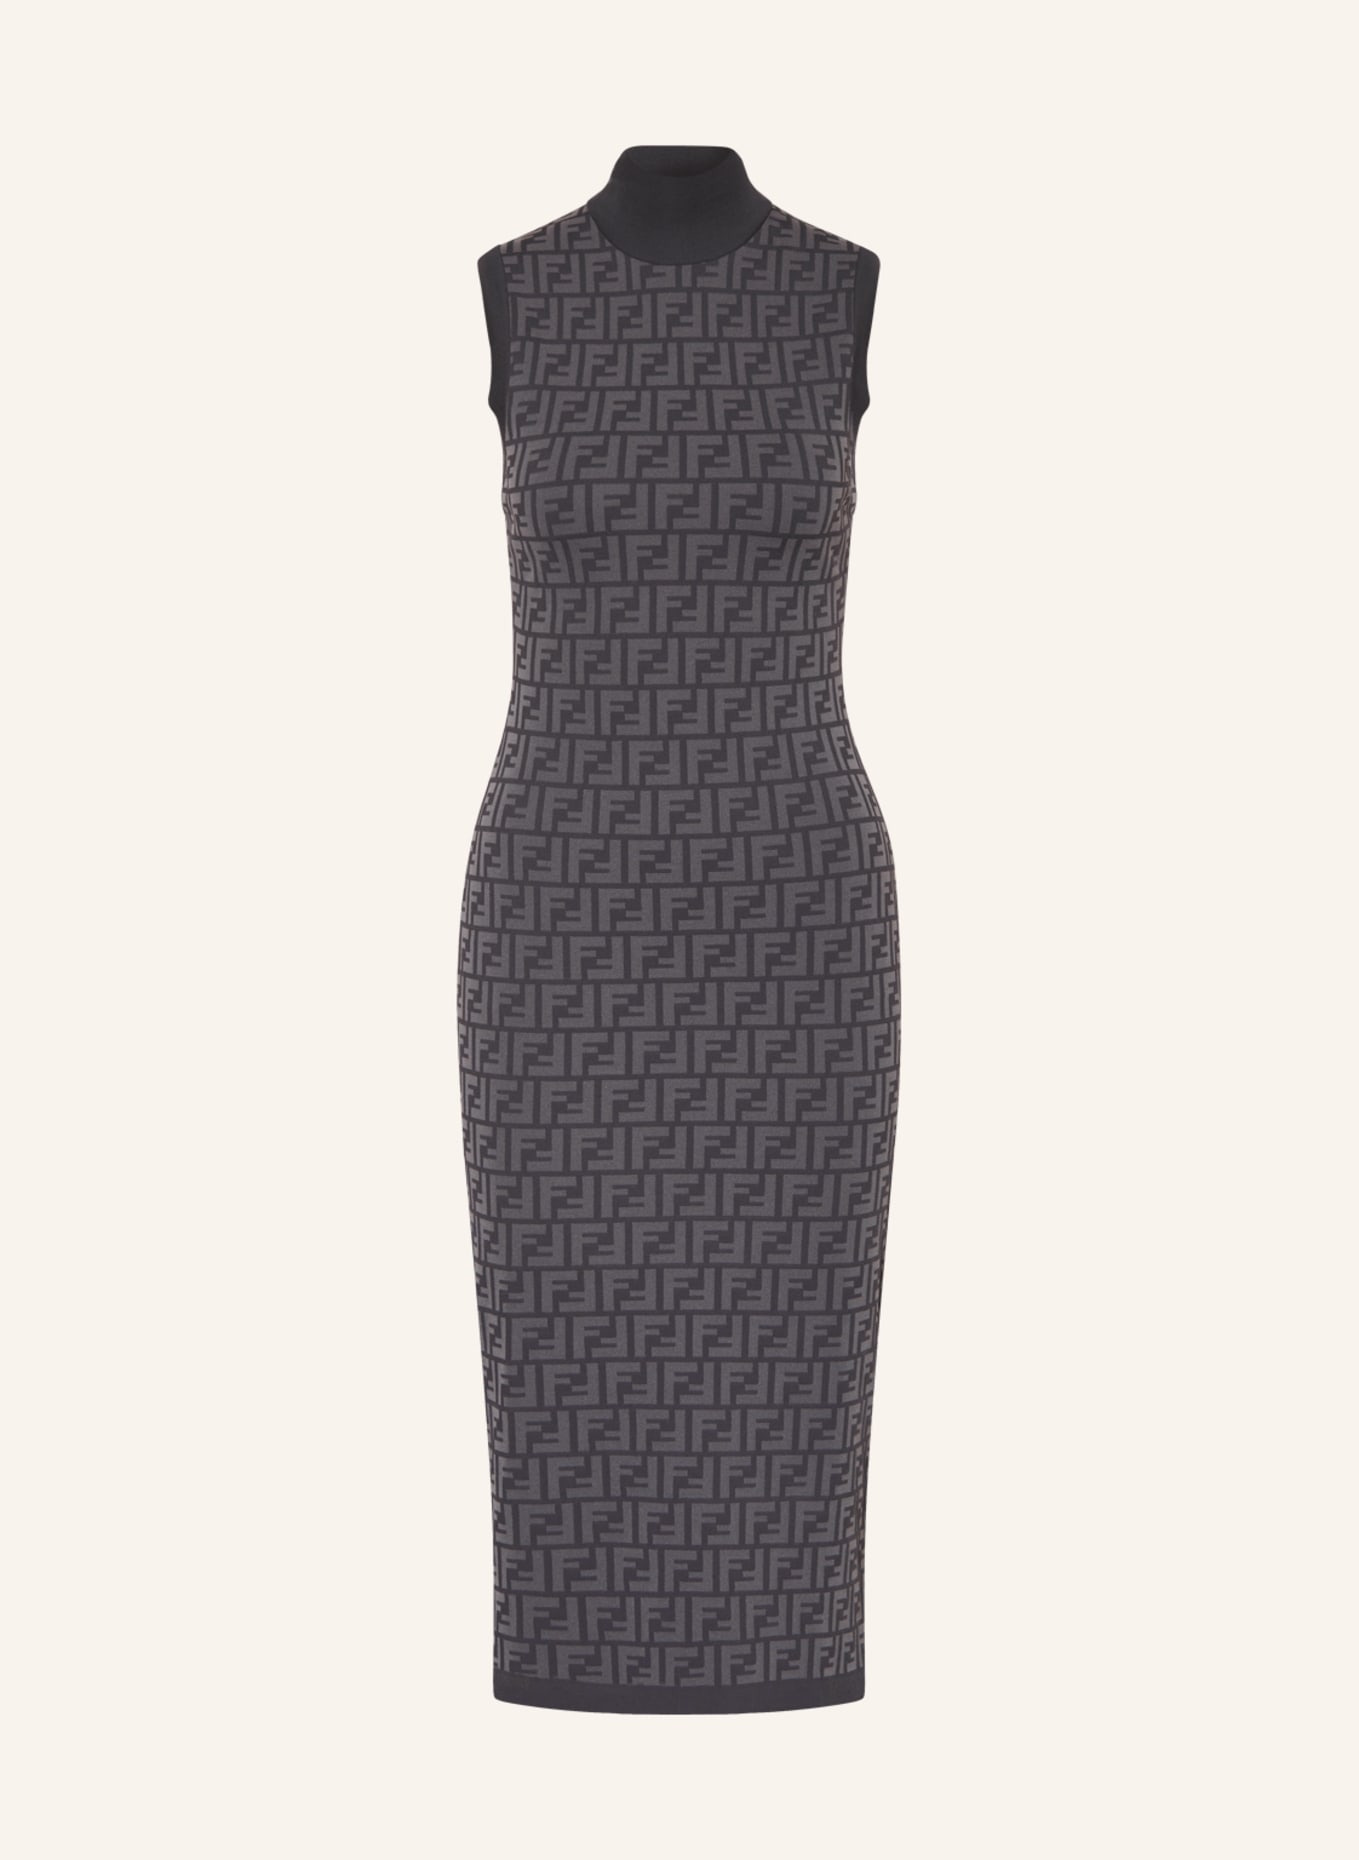 FENDI Knit dress, Color: GRAY/ DARK GRAY (Image 1)